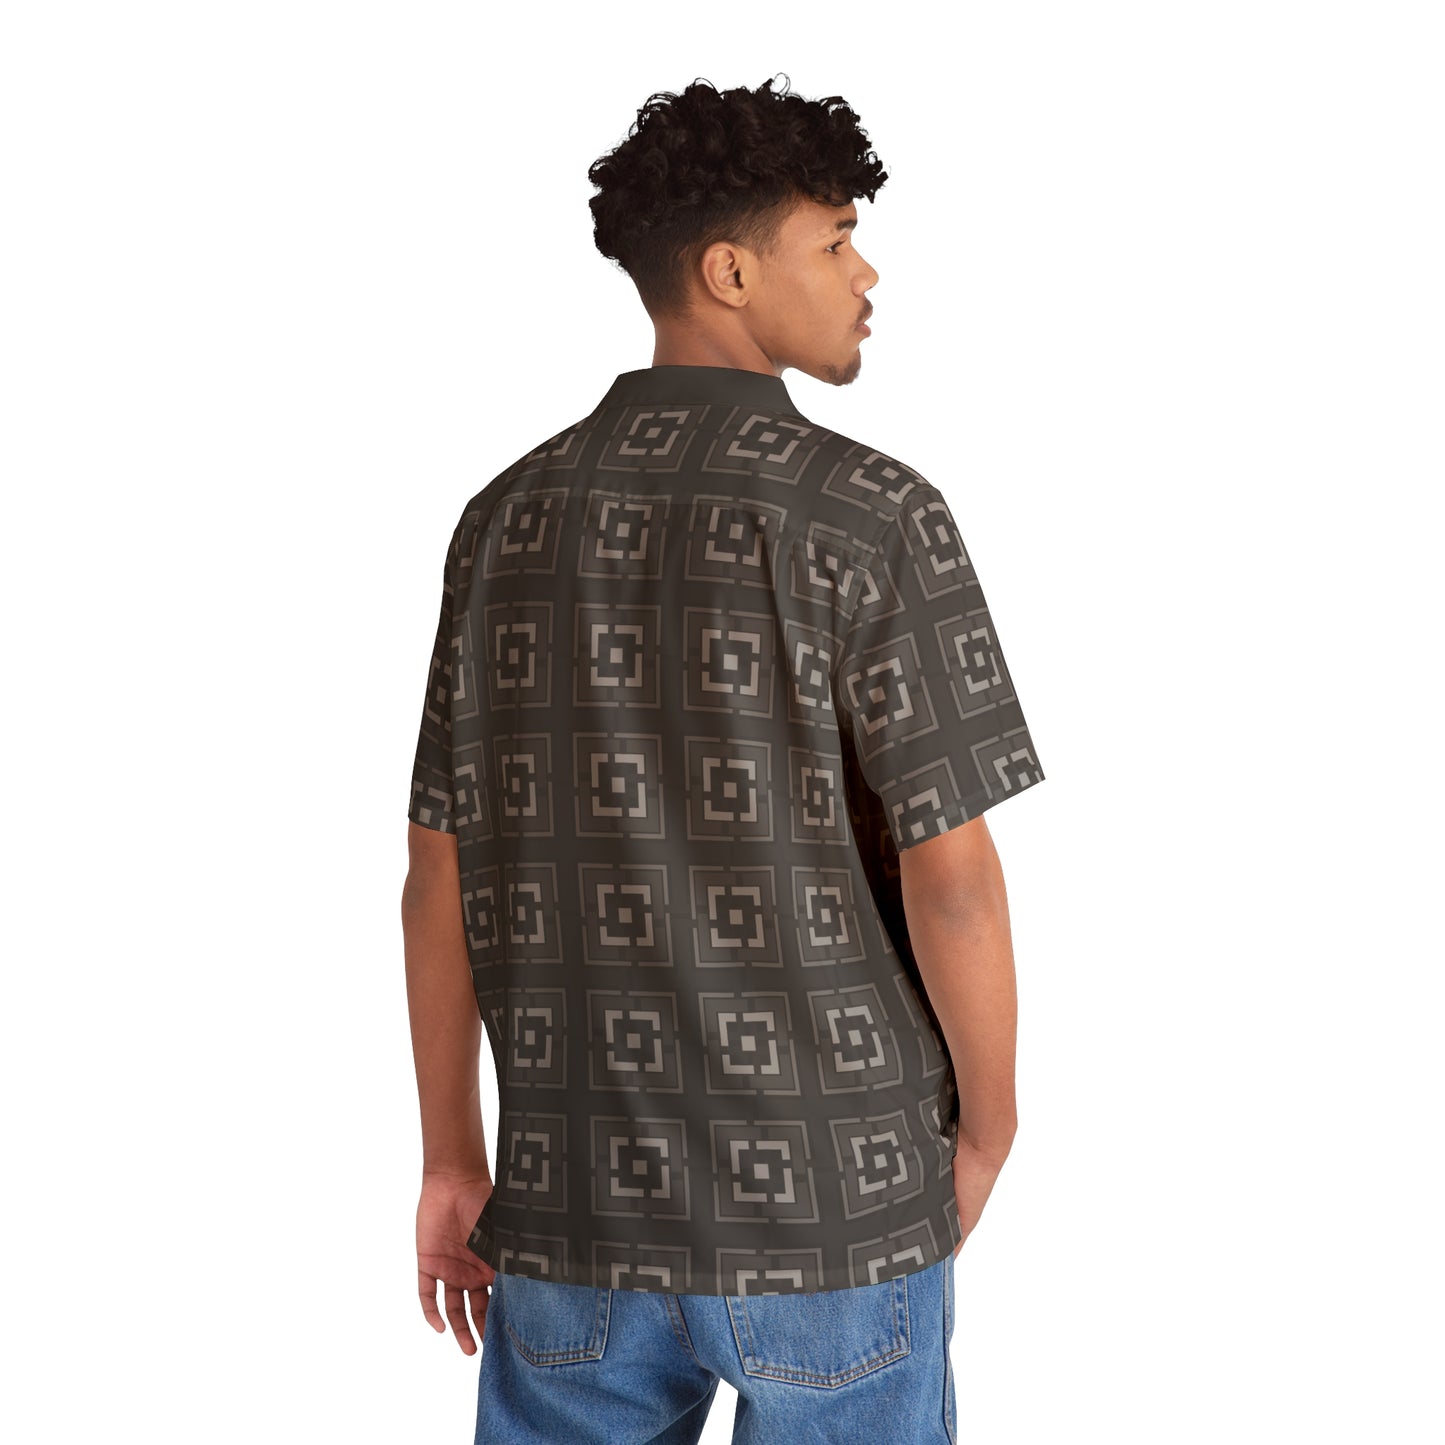 Intersecting Squares - Black Gray - Black 000000 - Black collar - Men's Hawaiian Shirt